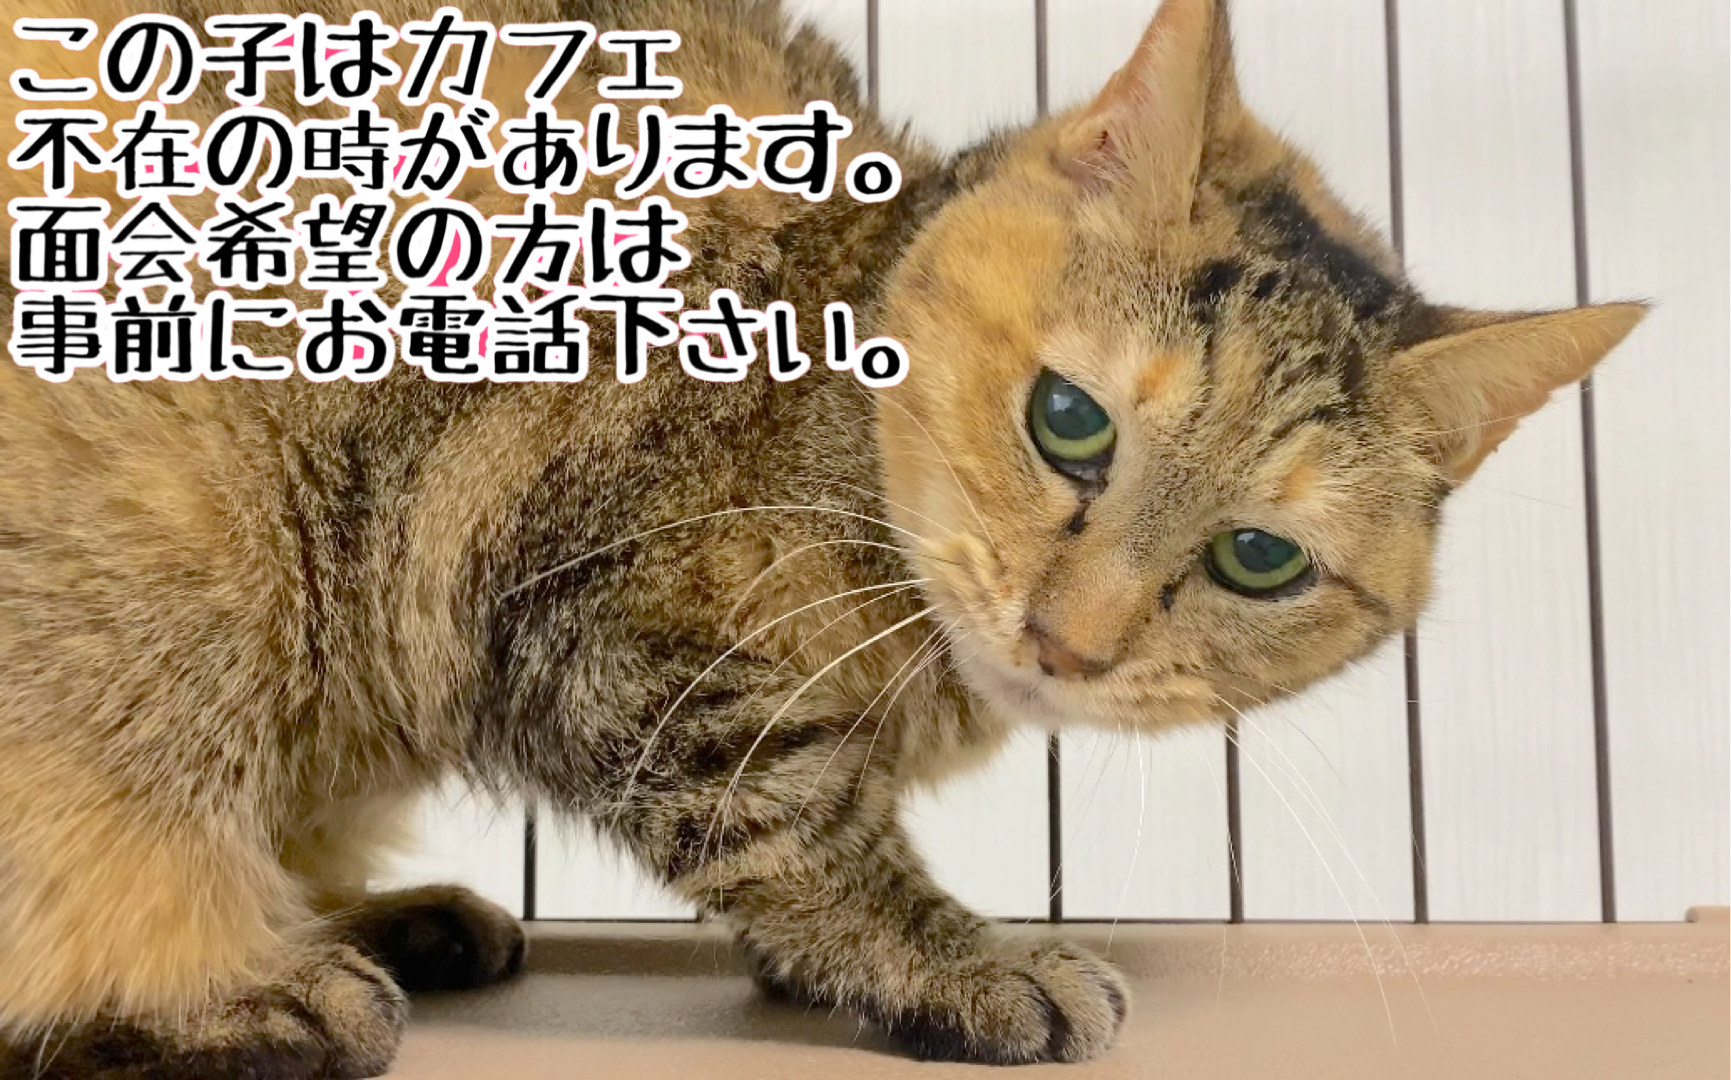 <ul>
<li>猫種：日本猫</li>
<li>名前（性別）：チョコ(女の子)</li>
<li>年齢：2010～2012年頃生まれ</li>
<li>保護経緯：飼い主が高齢になり逝去され飼育困難</li>
</ul>
